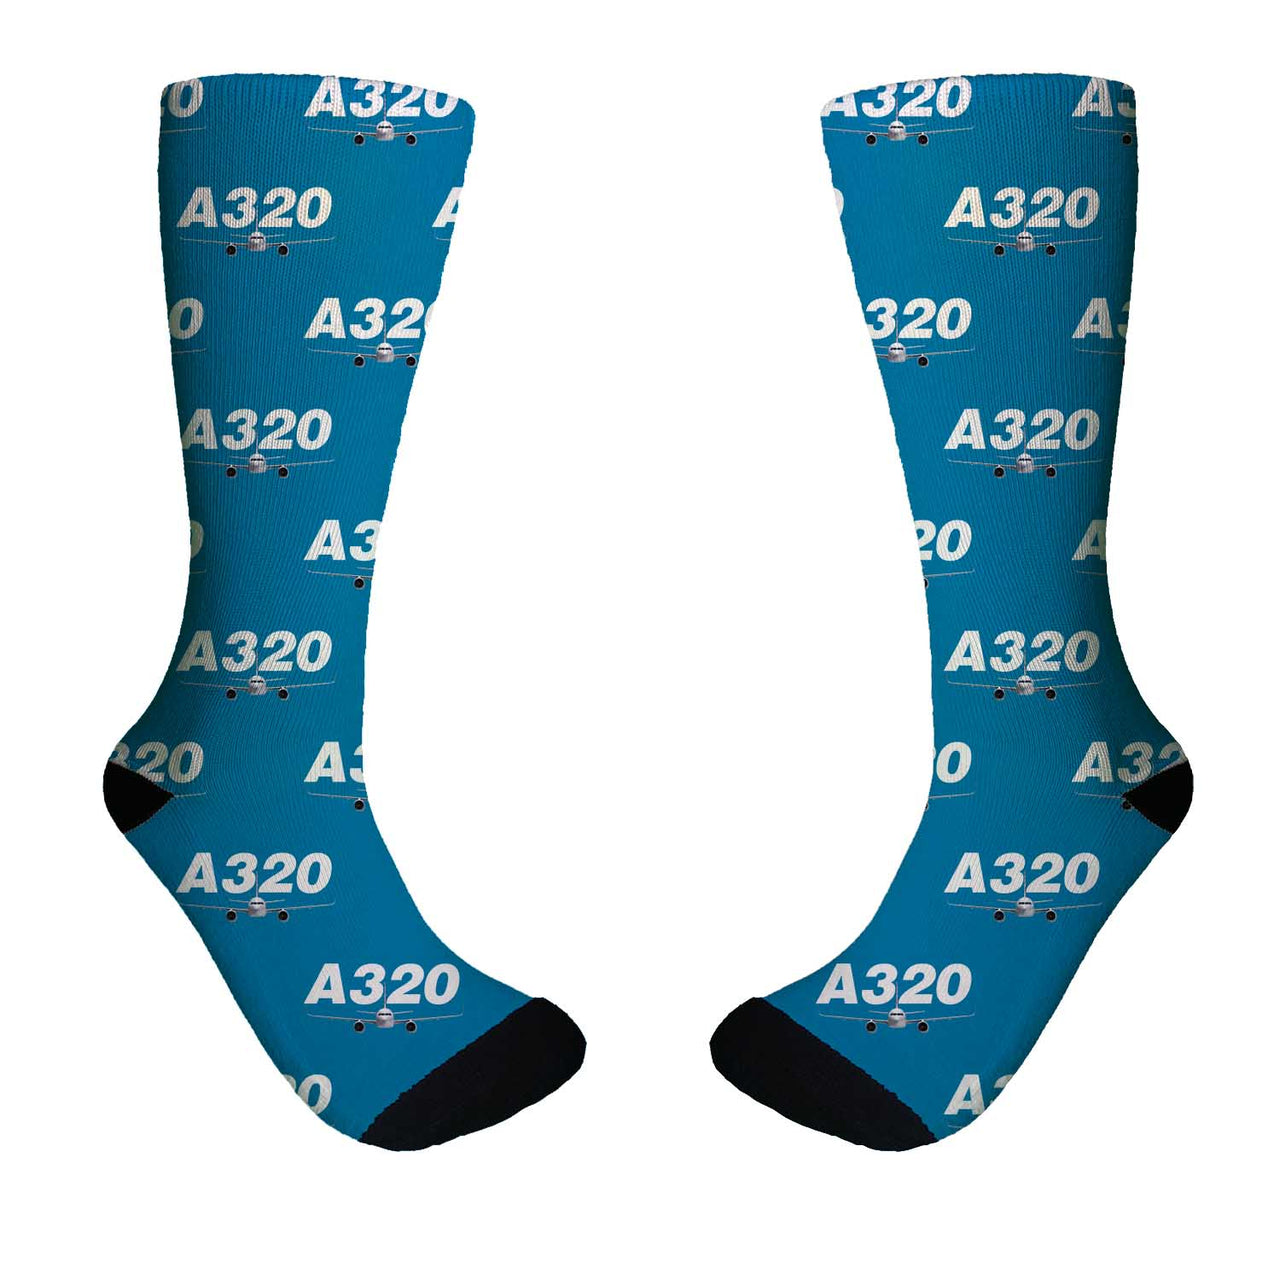 Super Airbus A320 Designed Socks